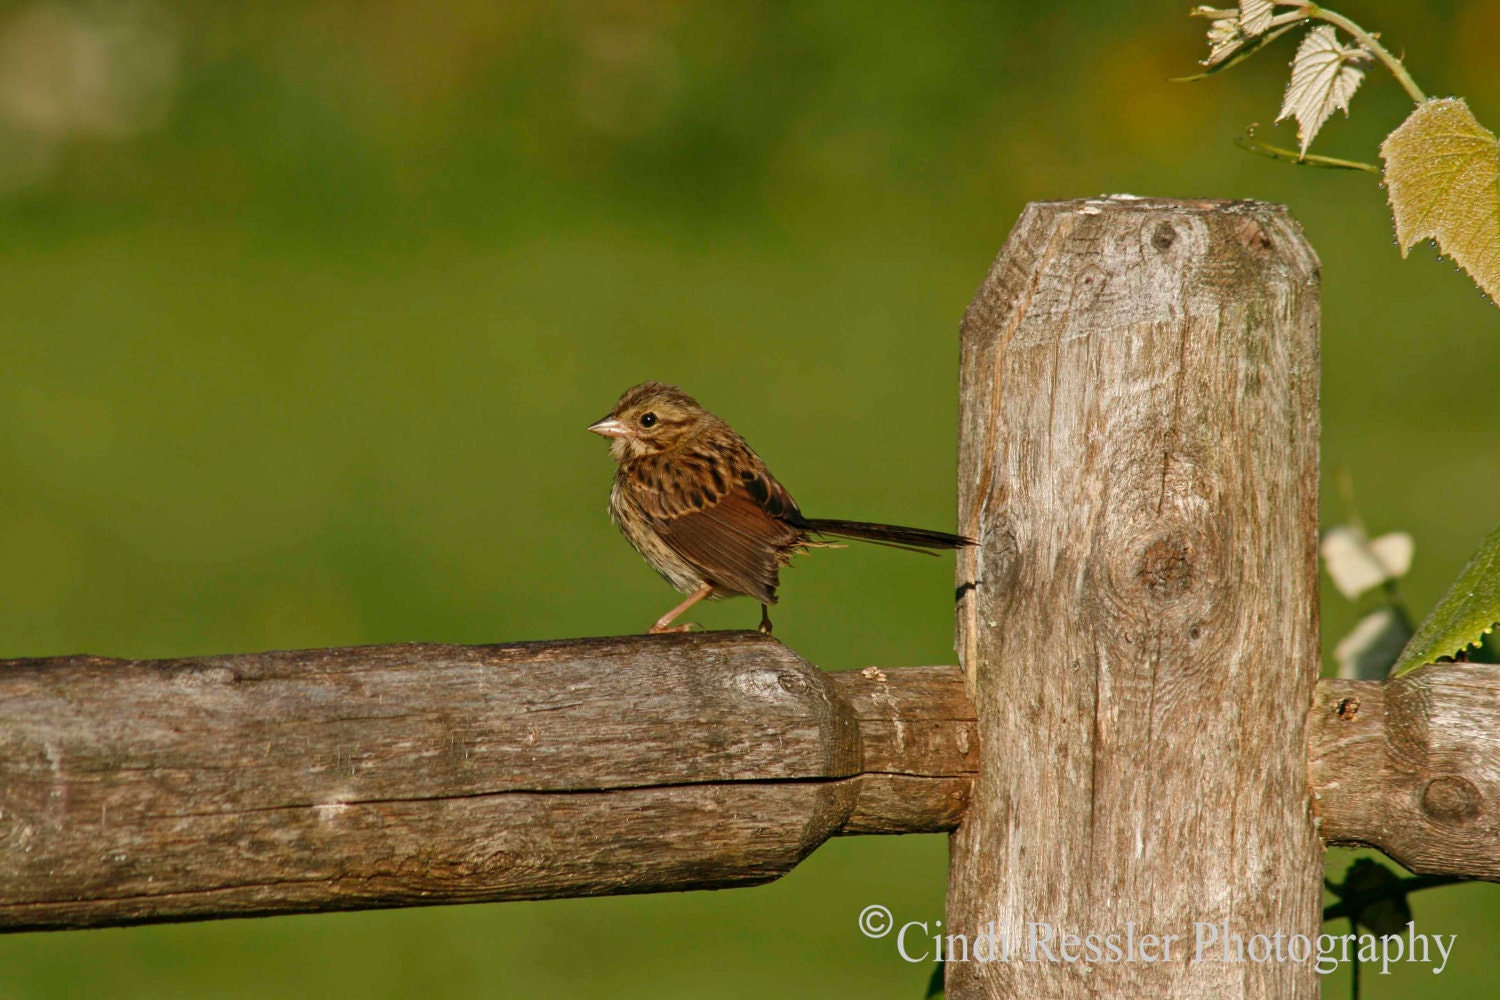 Sparrow on Fence, 5x7 Fine Art Photography, Bird Photography - CindiRessler